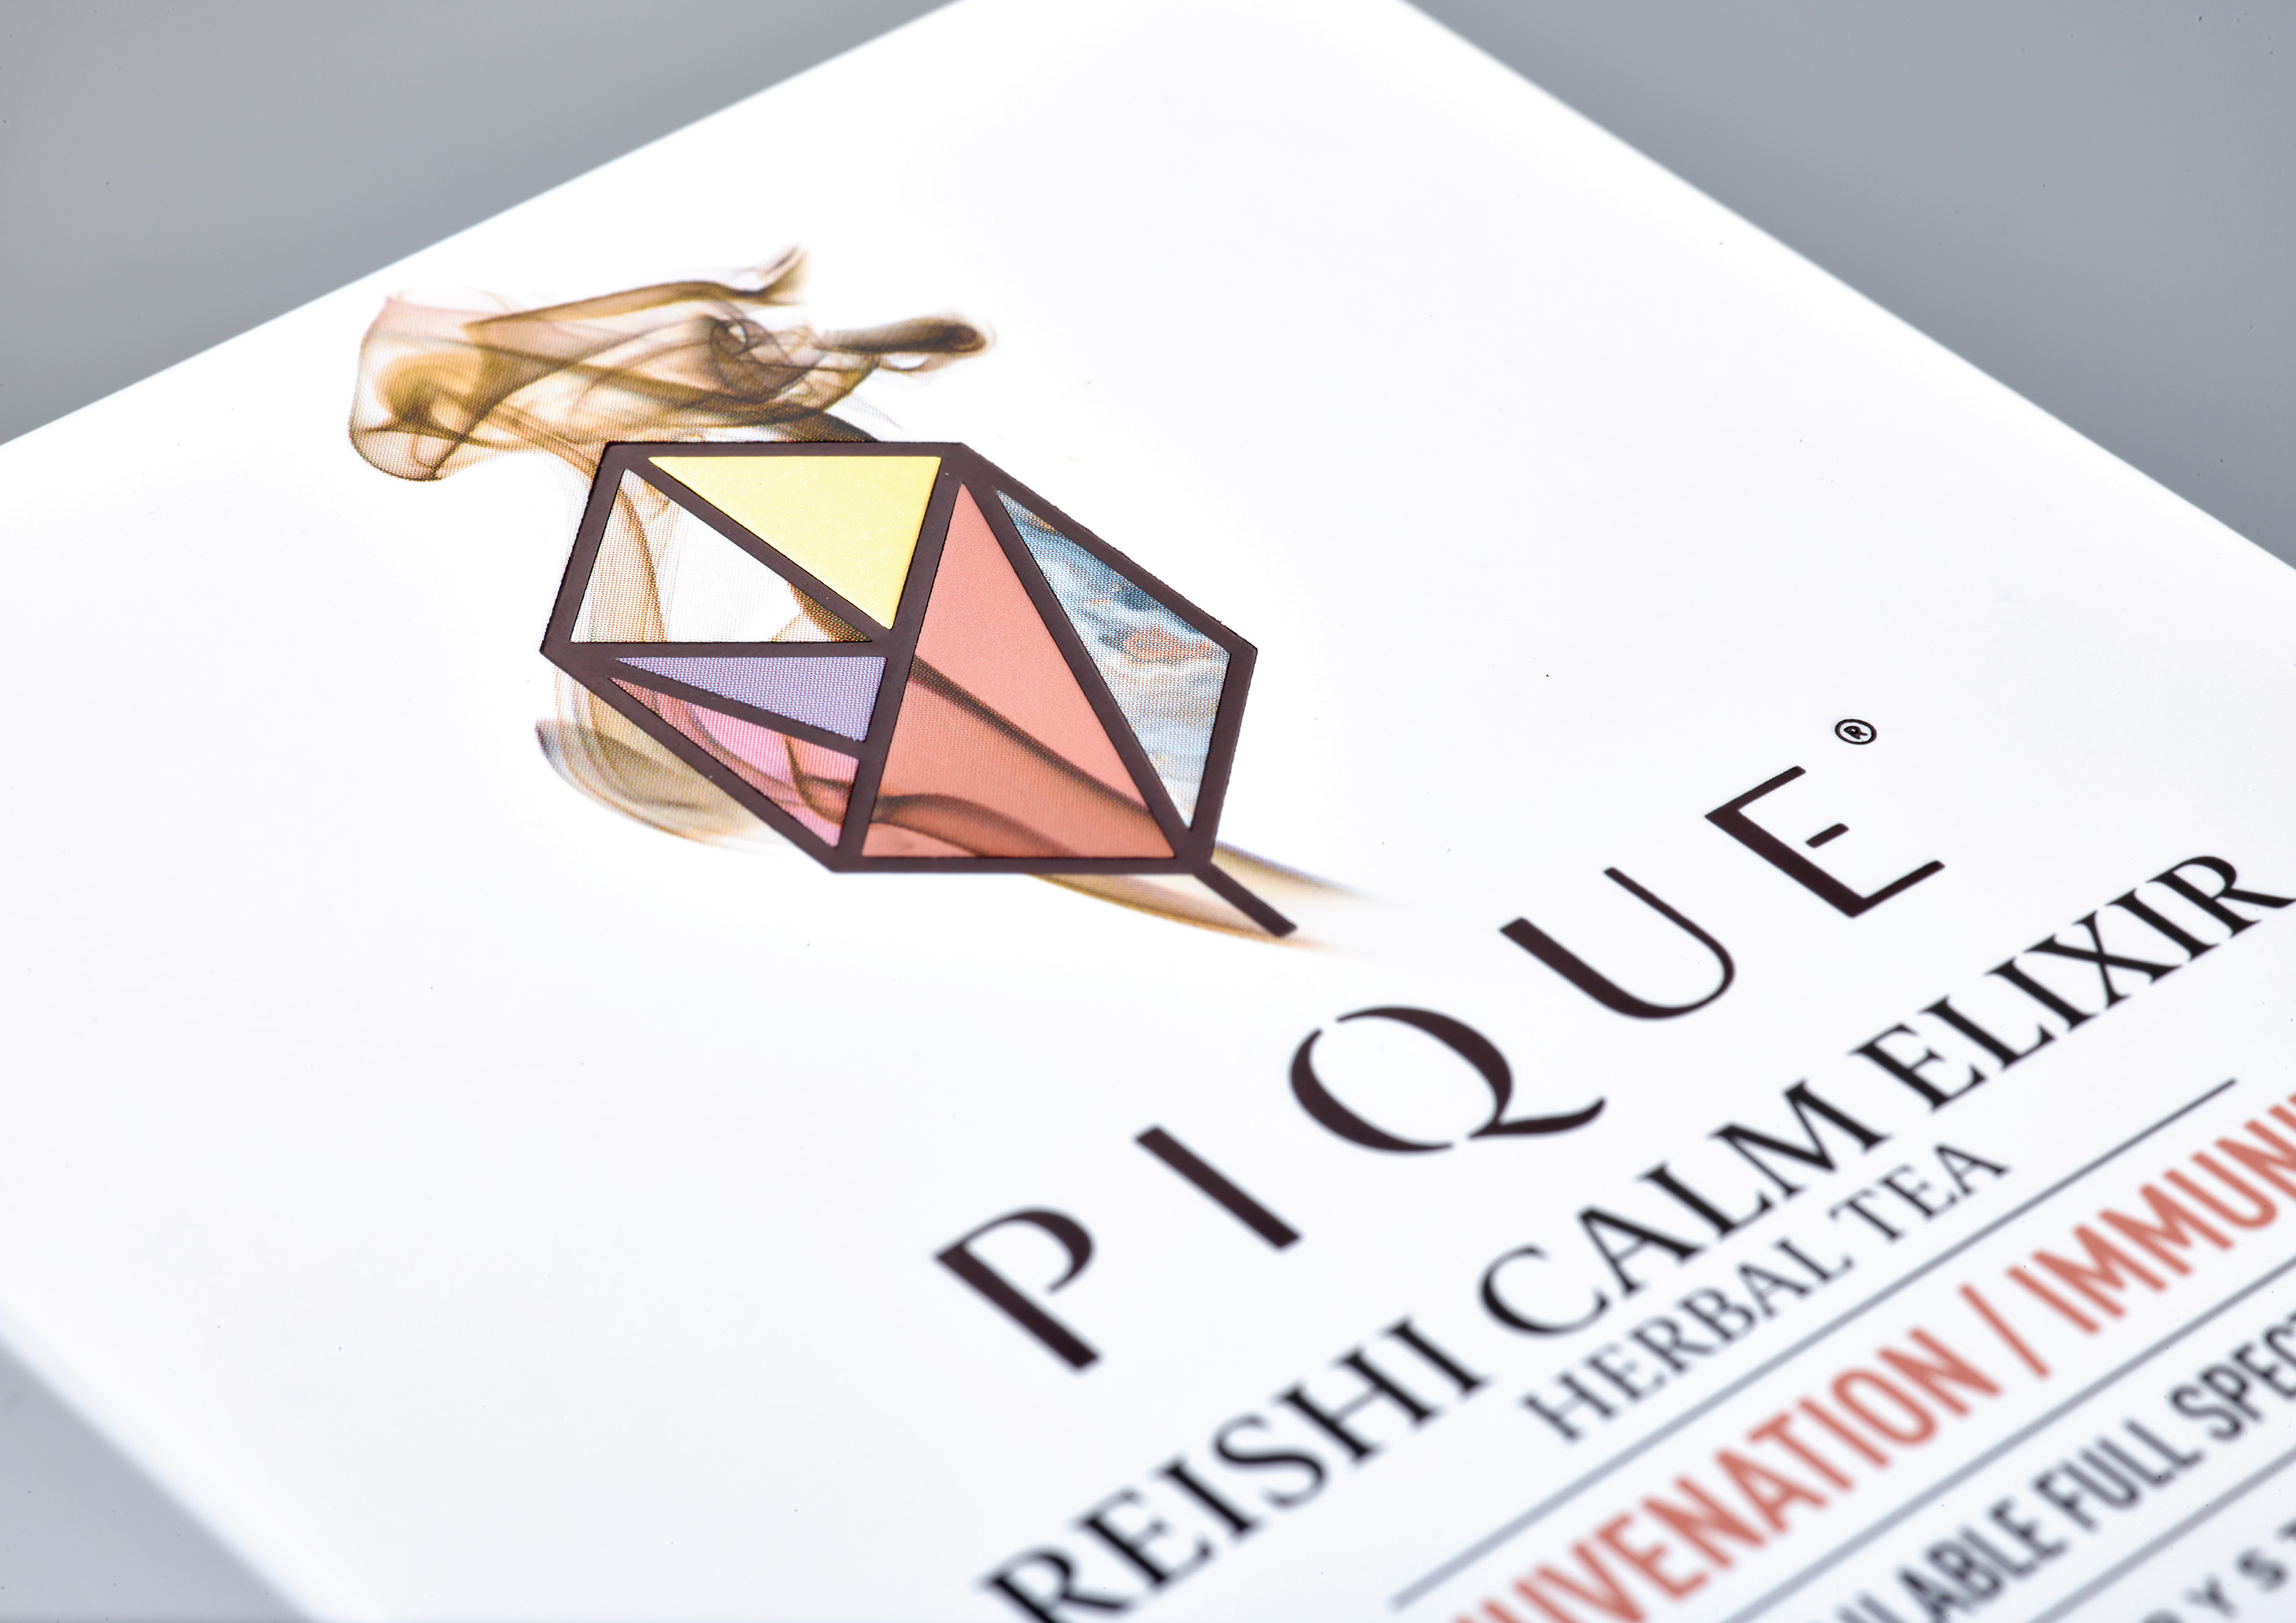 Packaging Redesign: Pique Teas